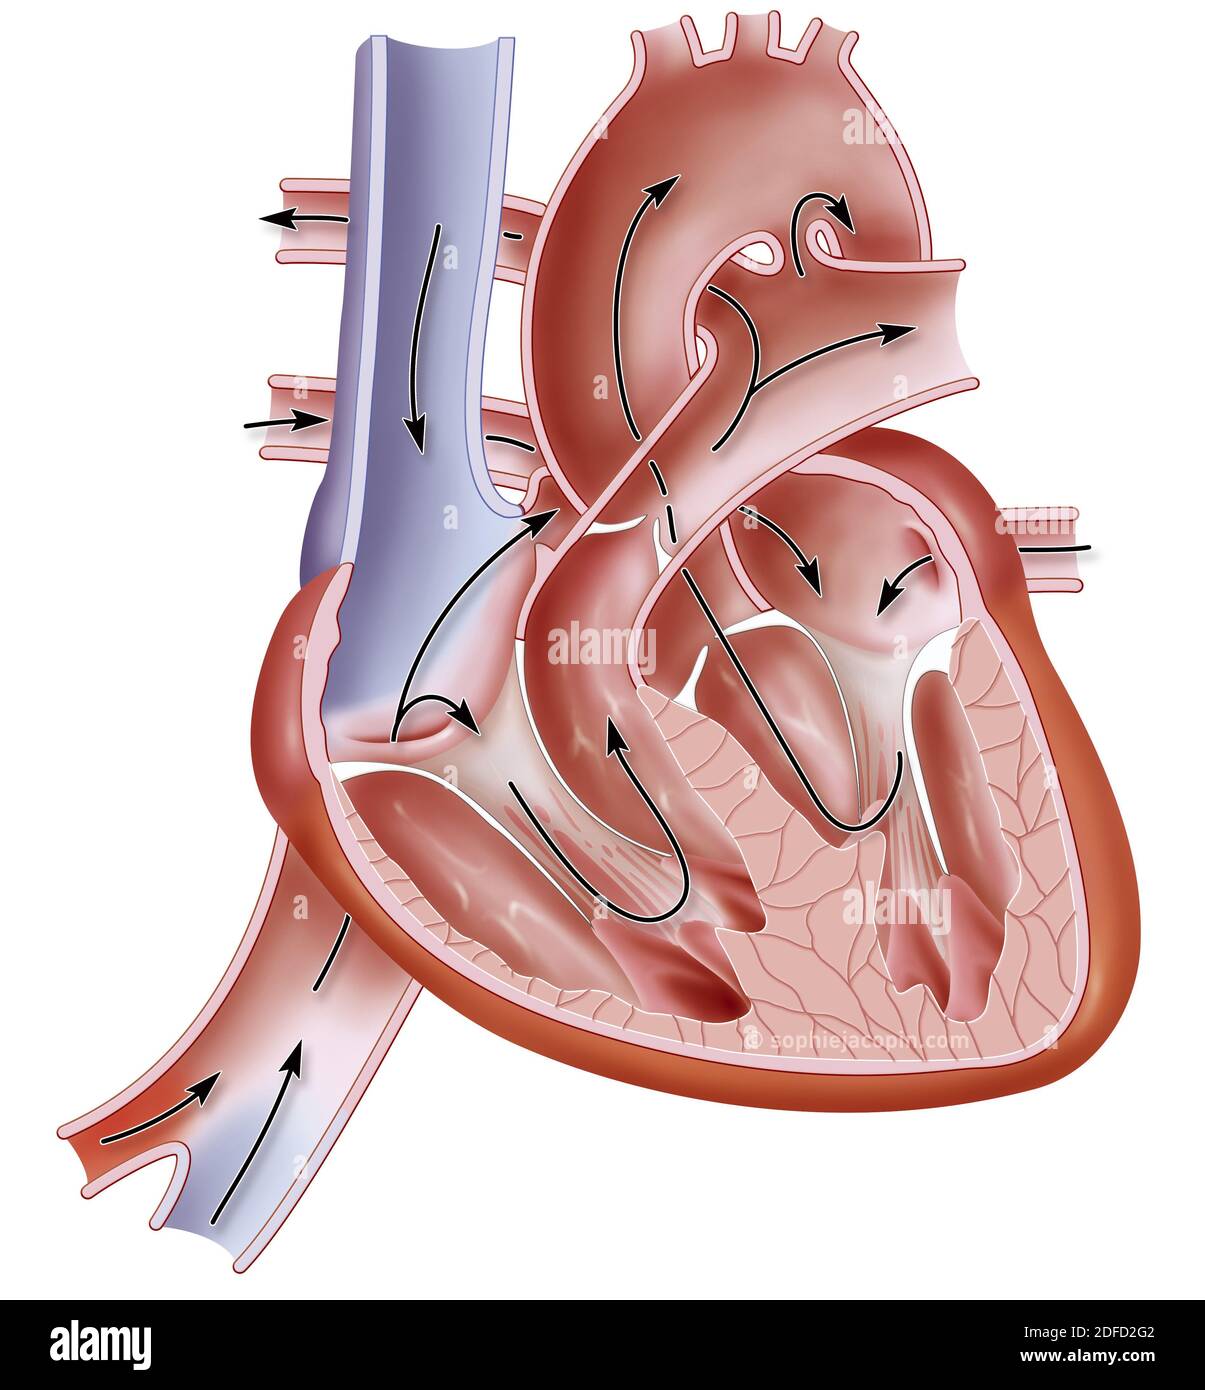 Heart of a fetus Stock Photo